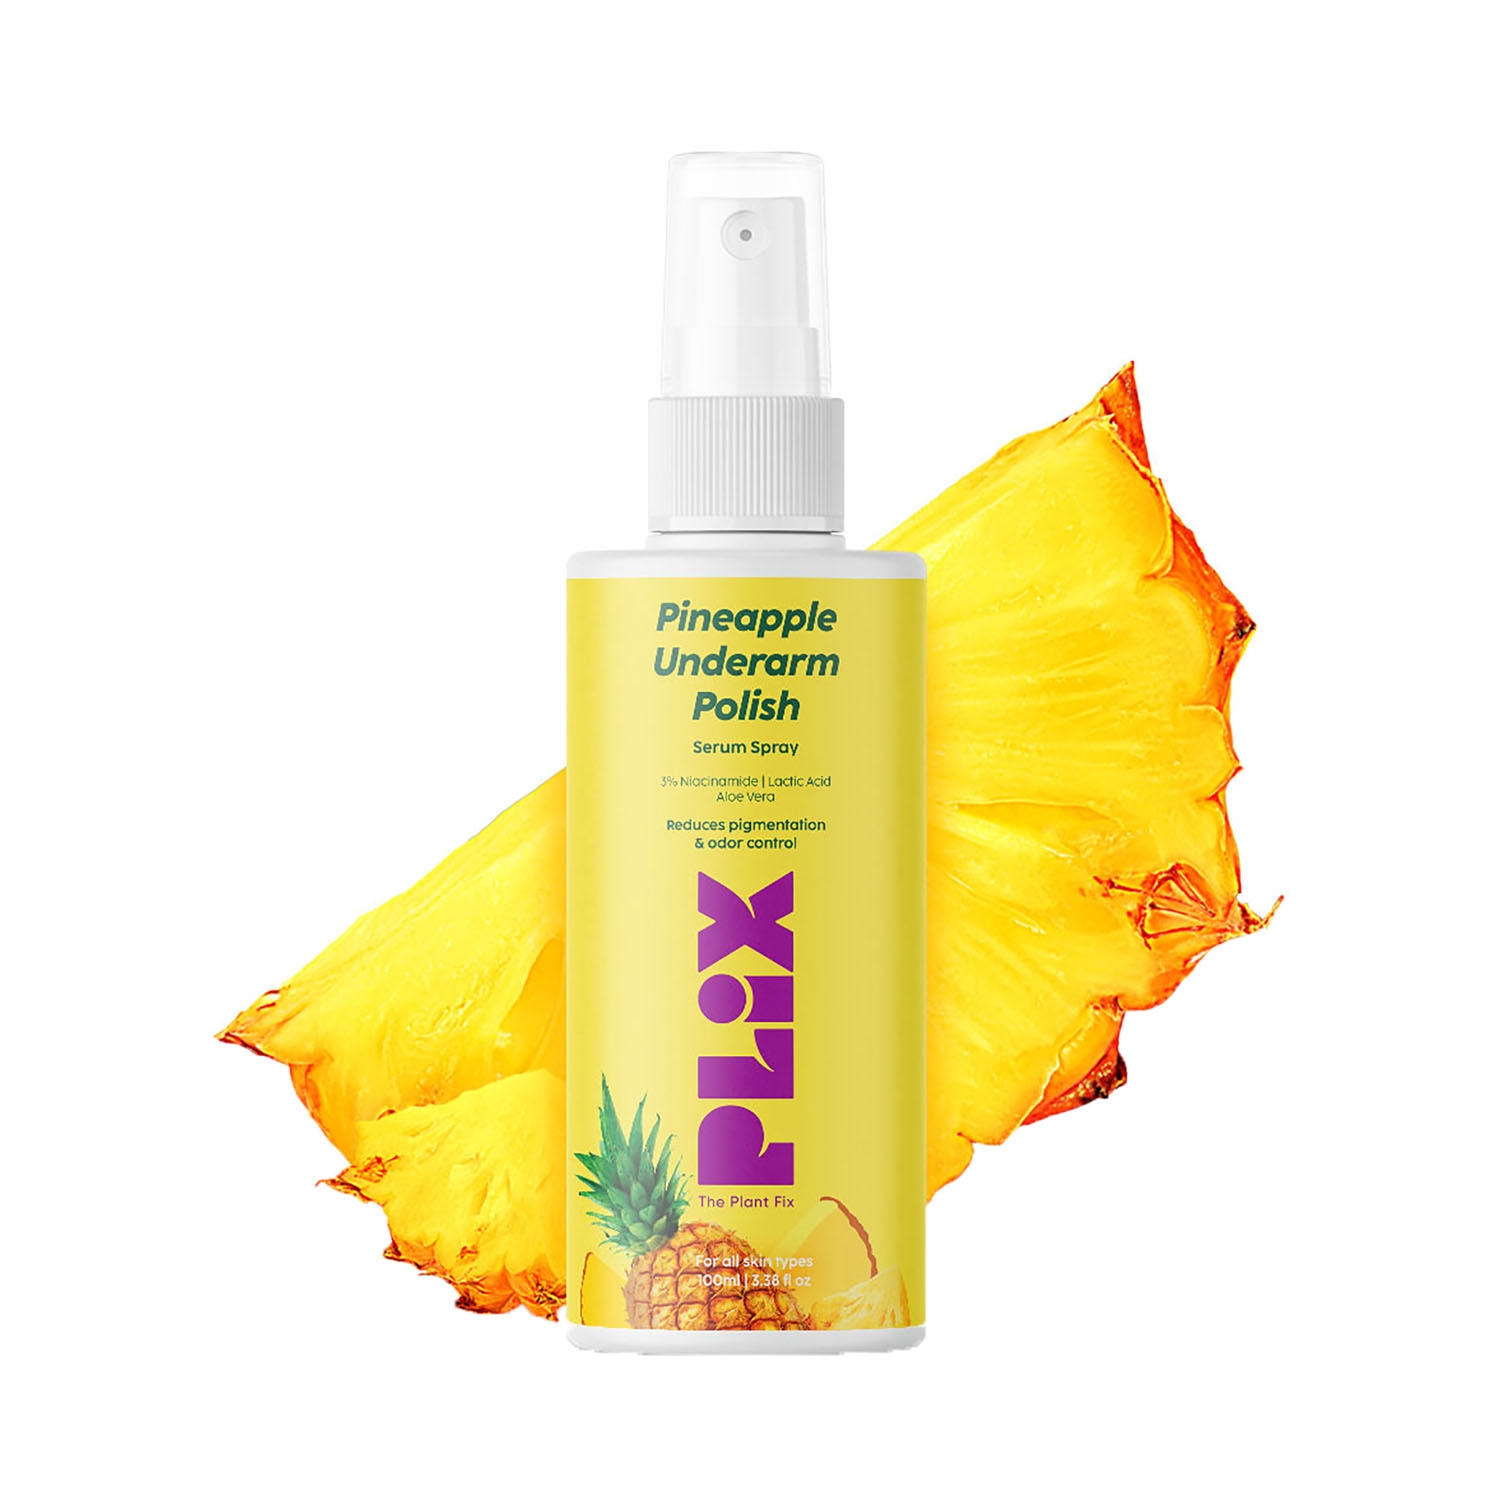 Plix The Plant Fix | Plix The Plant Fix Pineapple Underarms Polish Serum Spray (100ml)